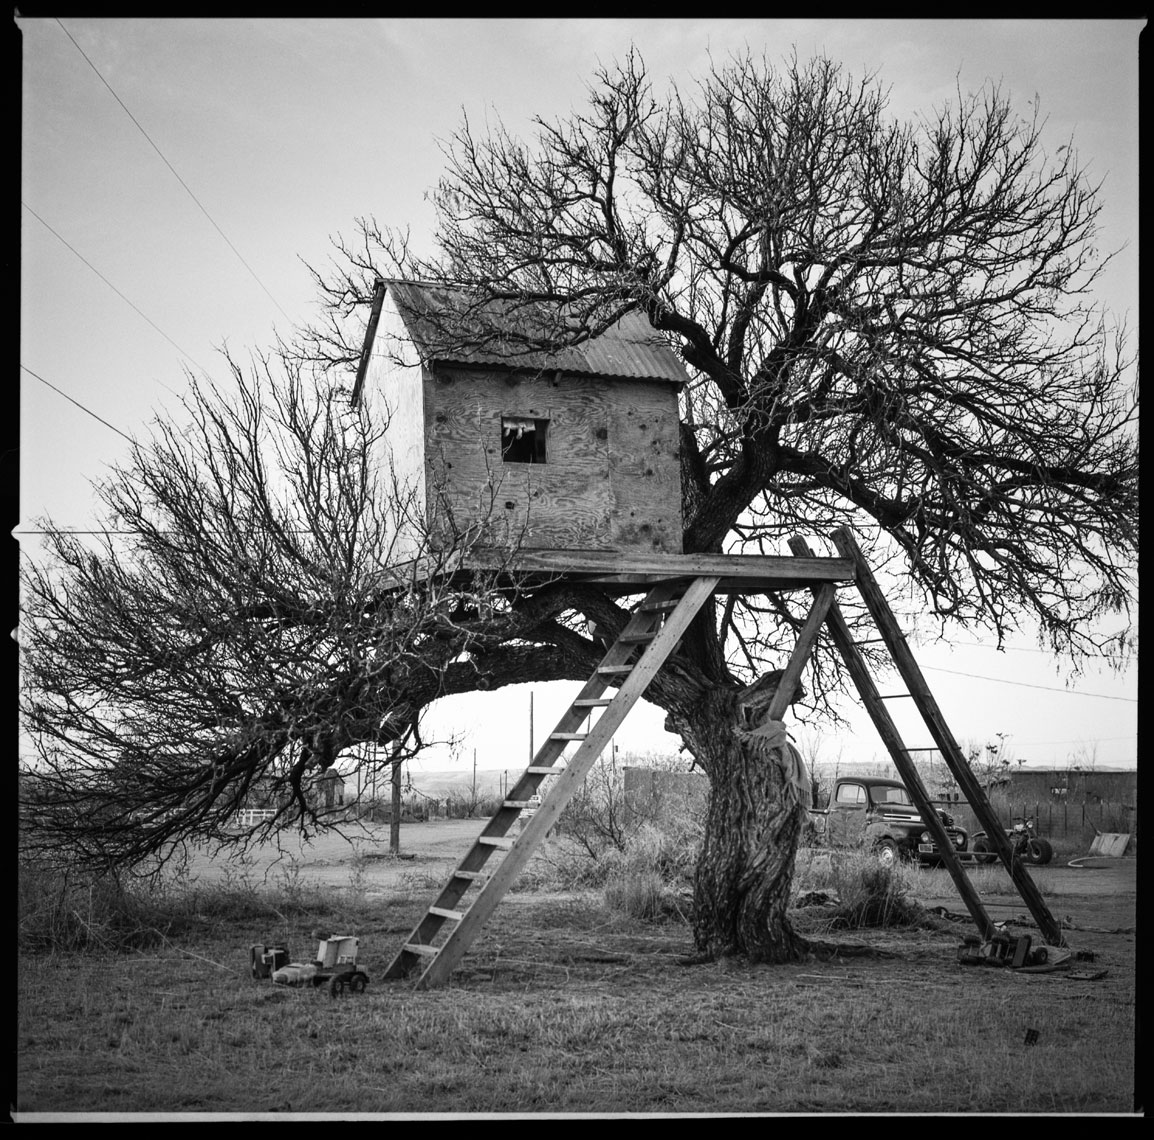  Treehouse Valentine, Texas 2010    1:1  